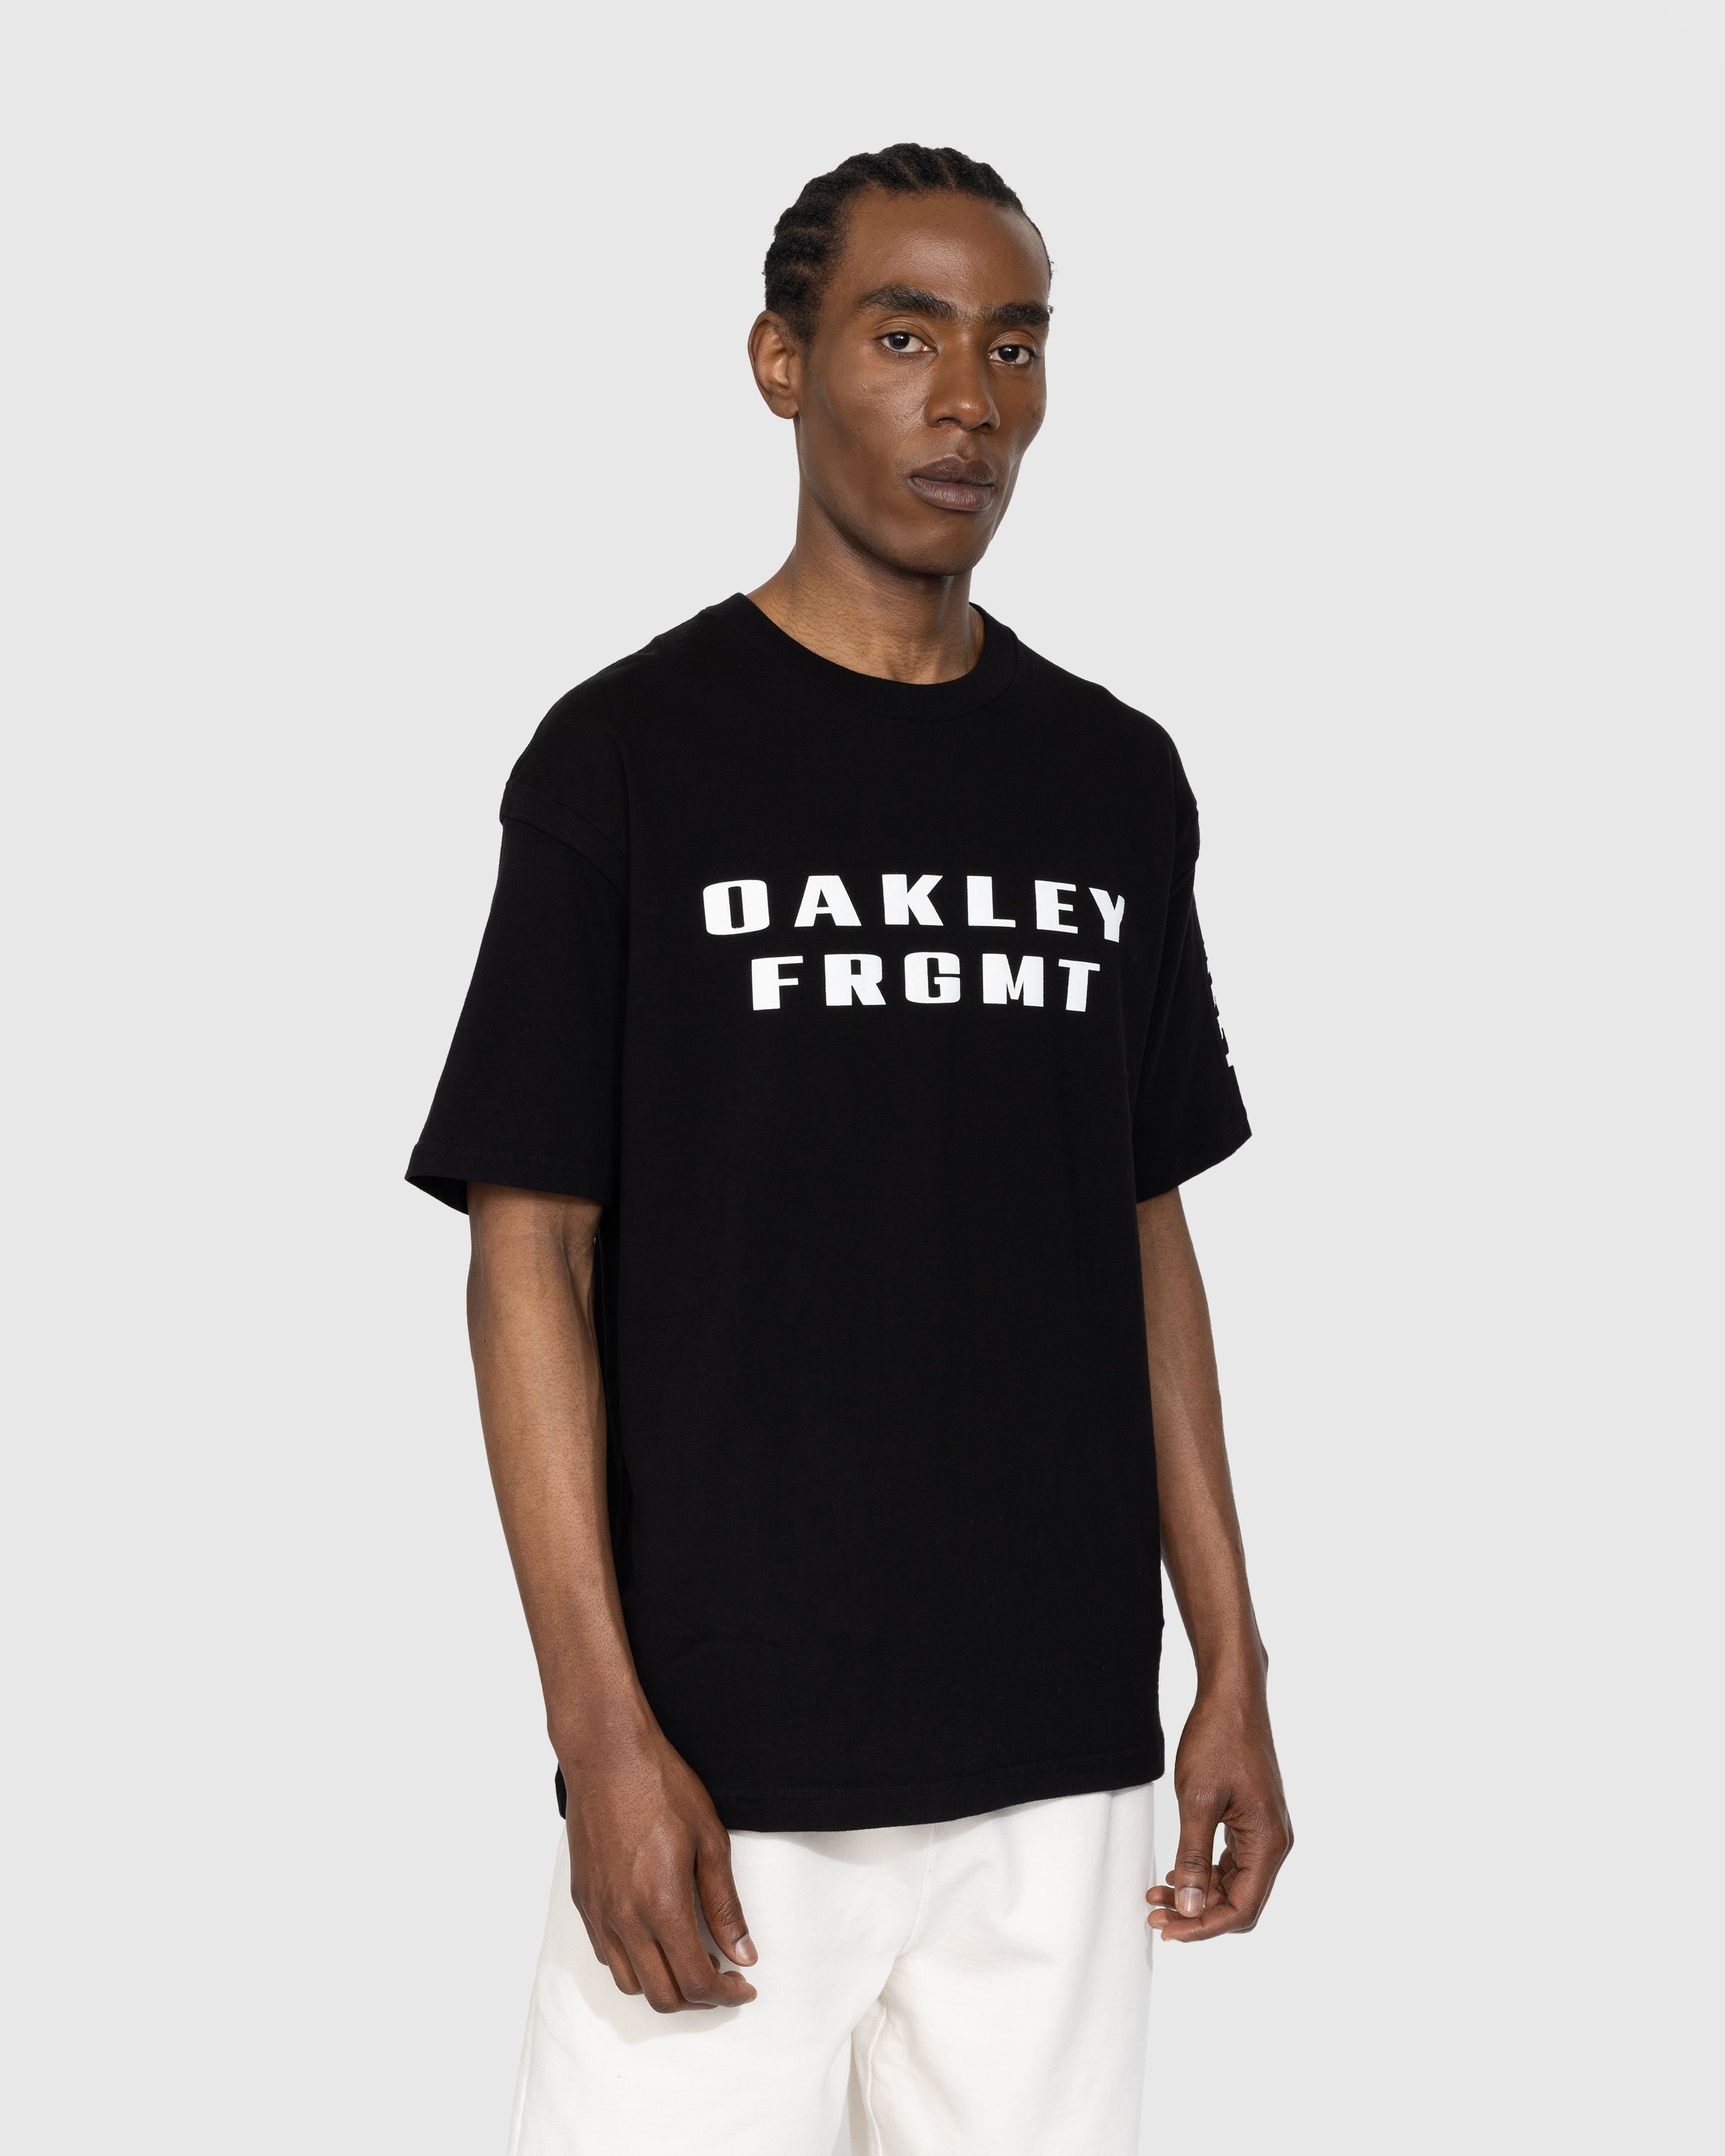 Oakley x Fragment - T-Shirt Blackout - Clothing - Black - Image 2